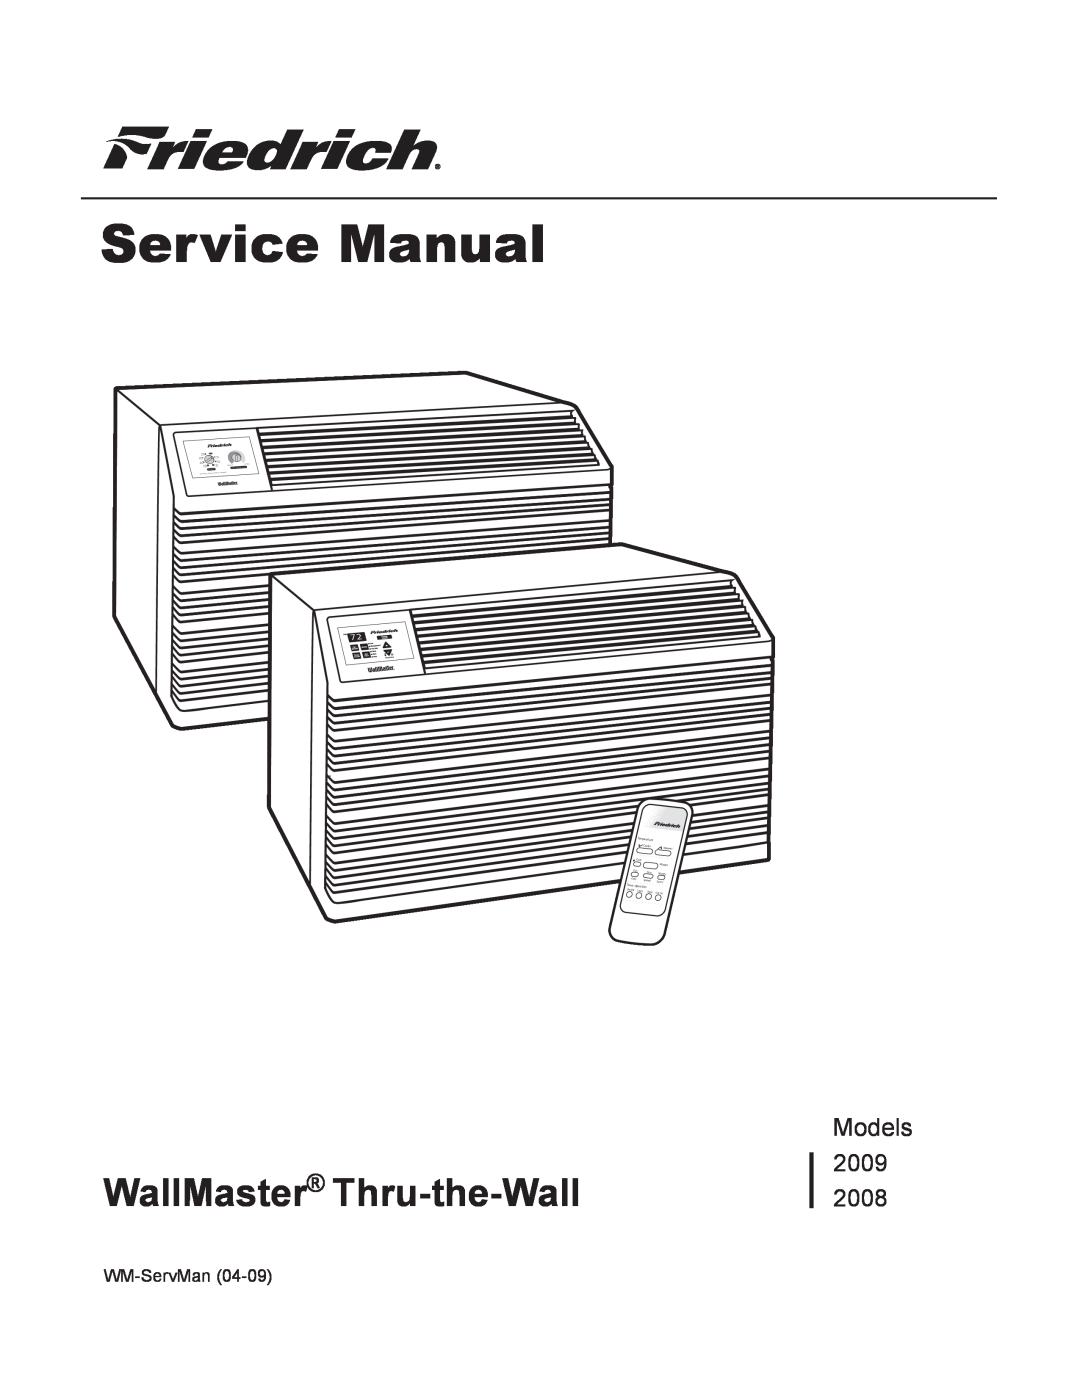 Friedrich 2009, 2008 service manual Models, WallMaster Thru-the-Wall, Power 